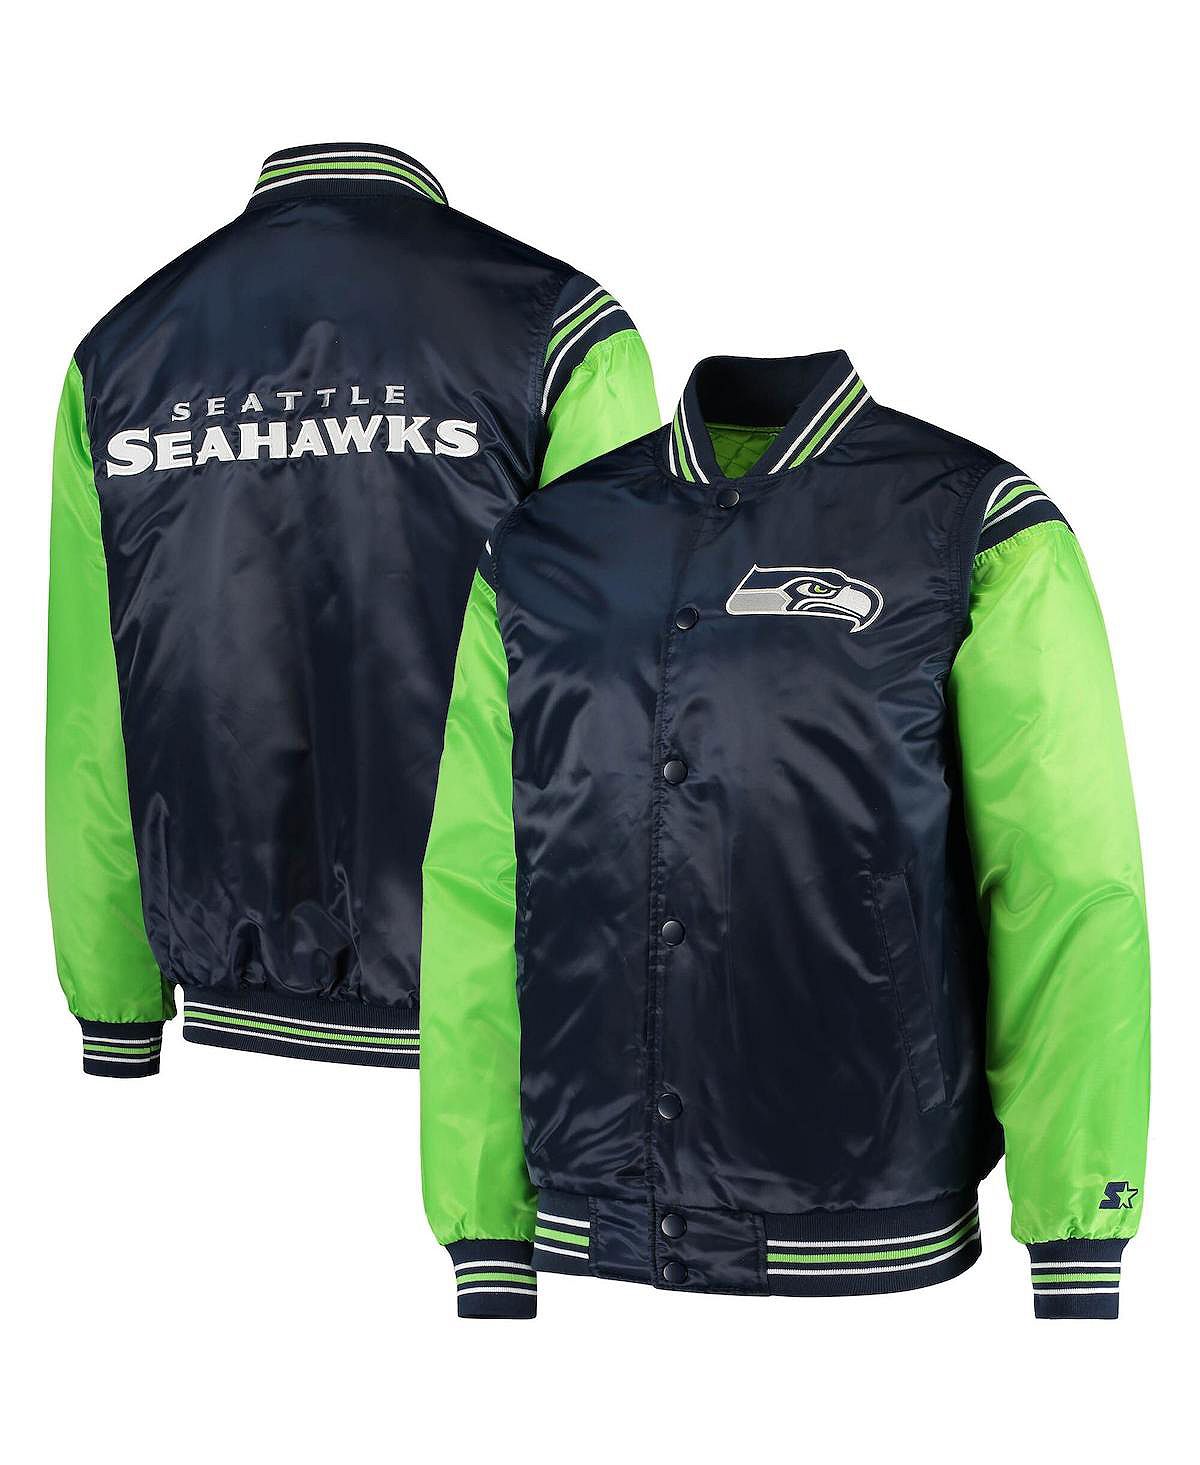 Мужская темно-синяя куртка колледжа, неоново-зеленая атласная университетская куртка seattle seahawks enforcer с застежкой на кнопках Starter, мульти цена и фото